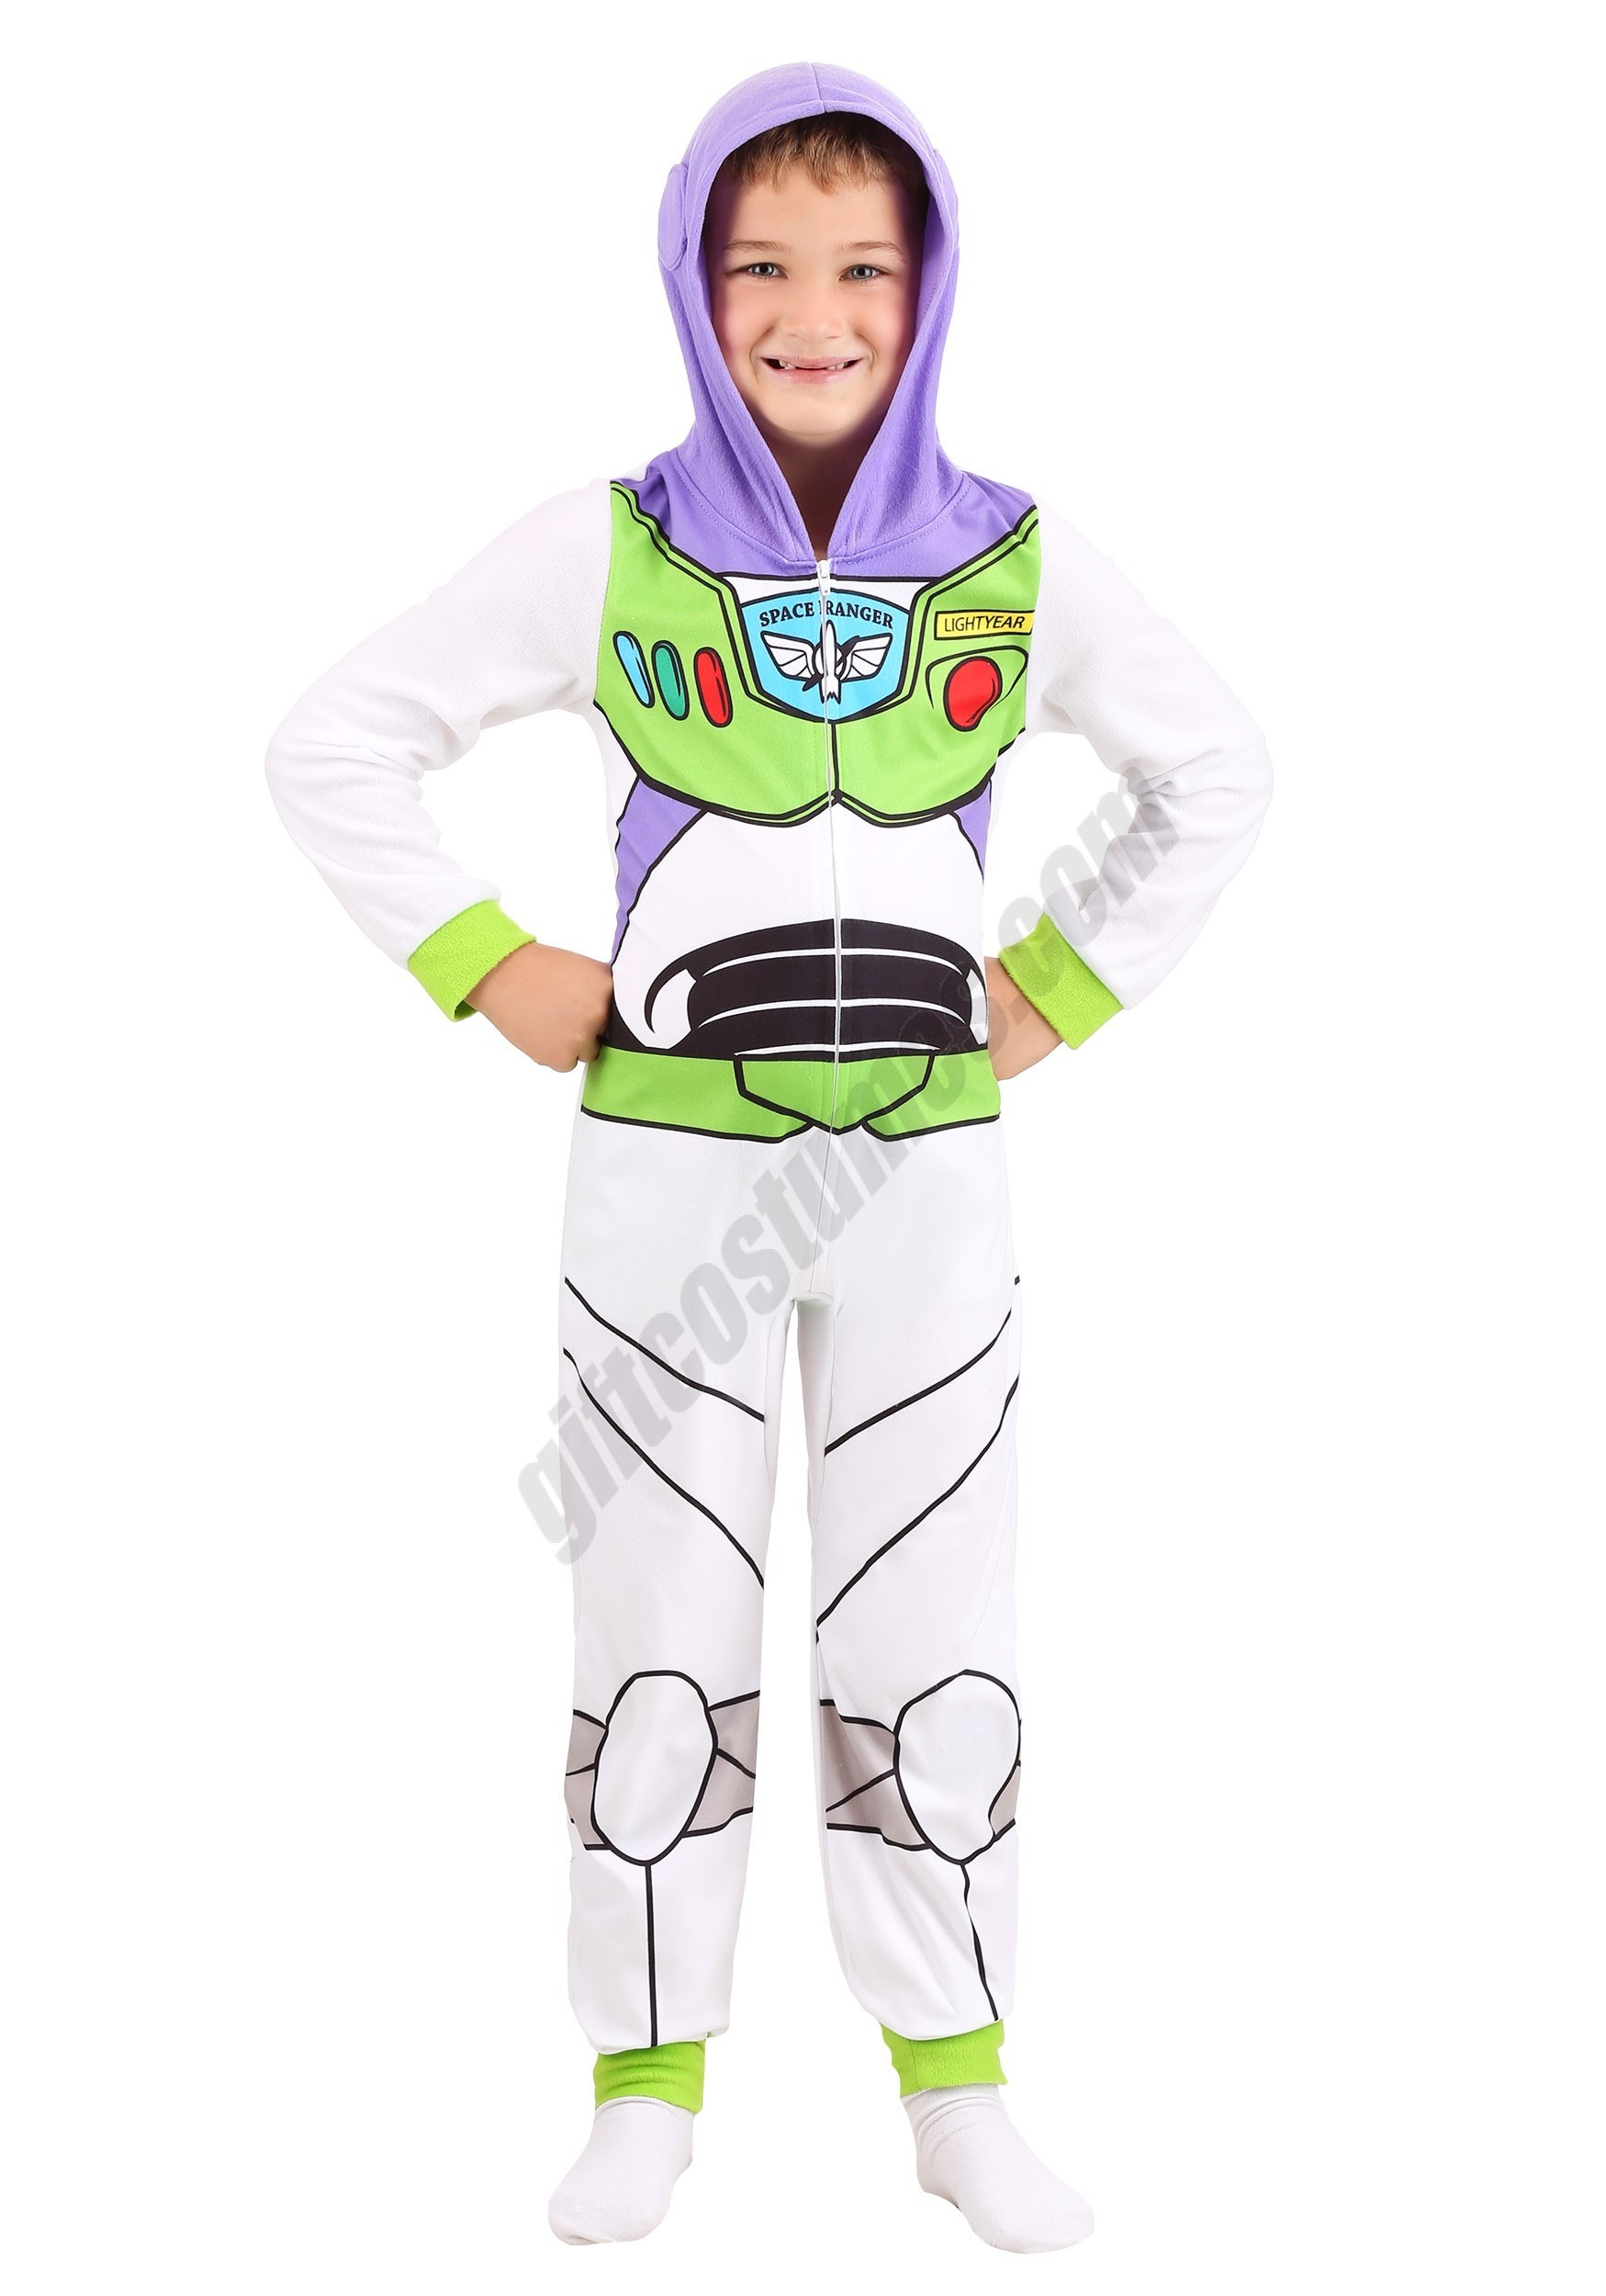 Boys Toy Story Buzz Lightyear Union Suit Promotions - Boys Toy Story Buzz Lightyear Union Suit Promotions